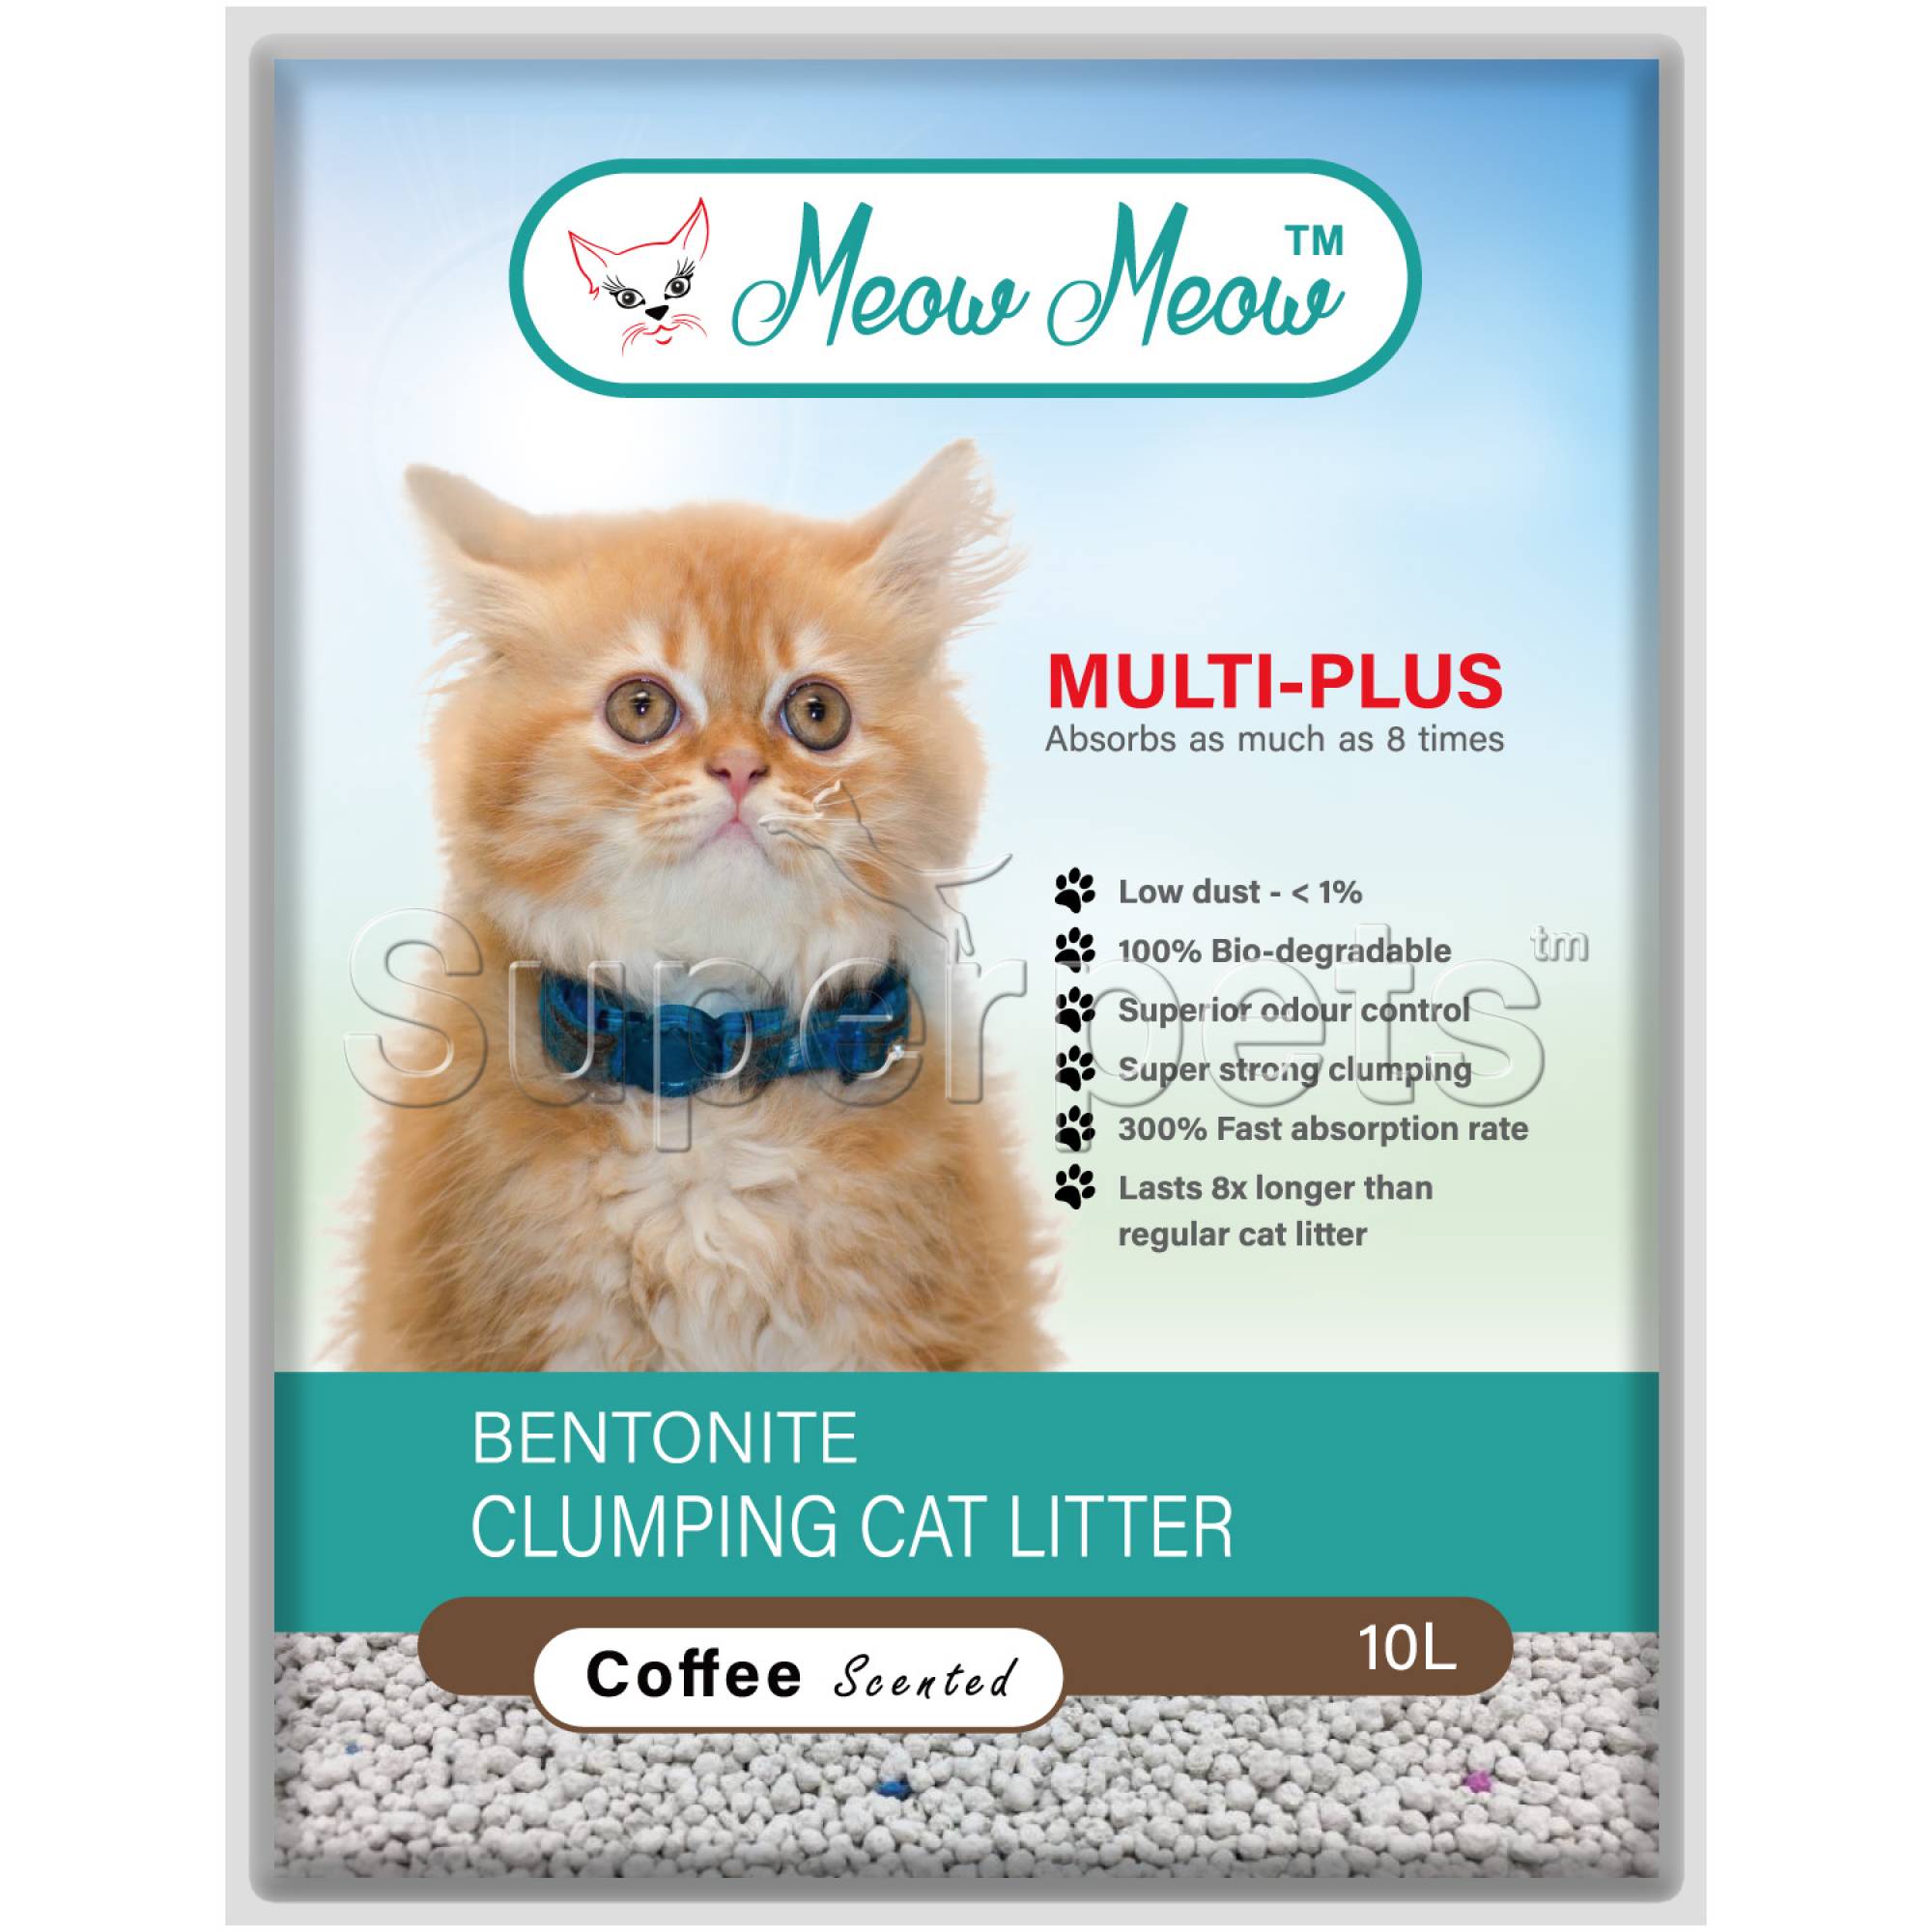 Meow Meow - Multi-Plus Bentonite Cat Litter - Coffee 10L